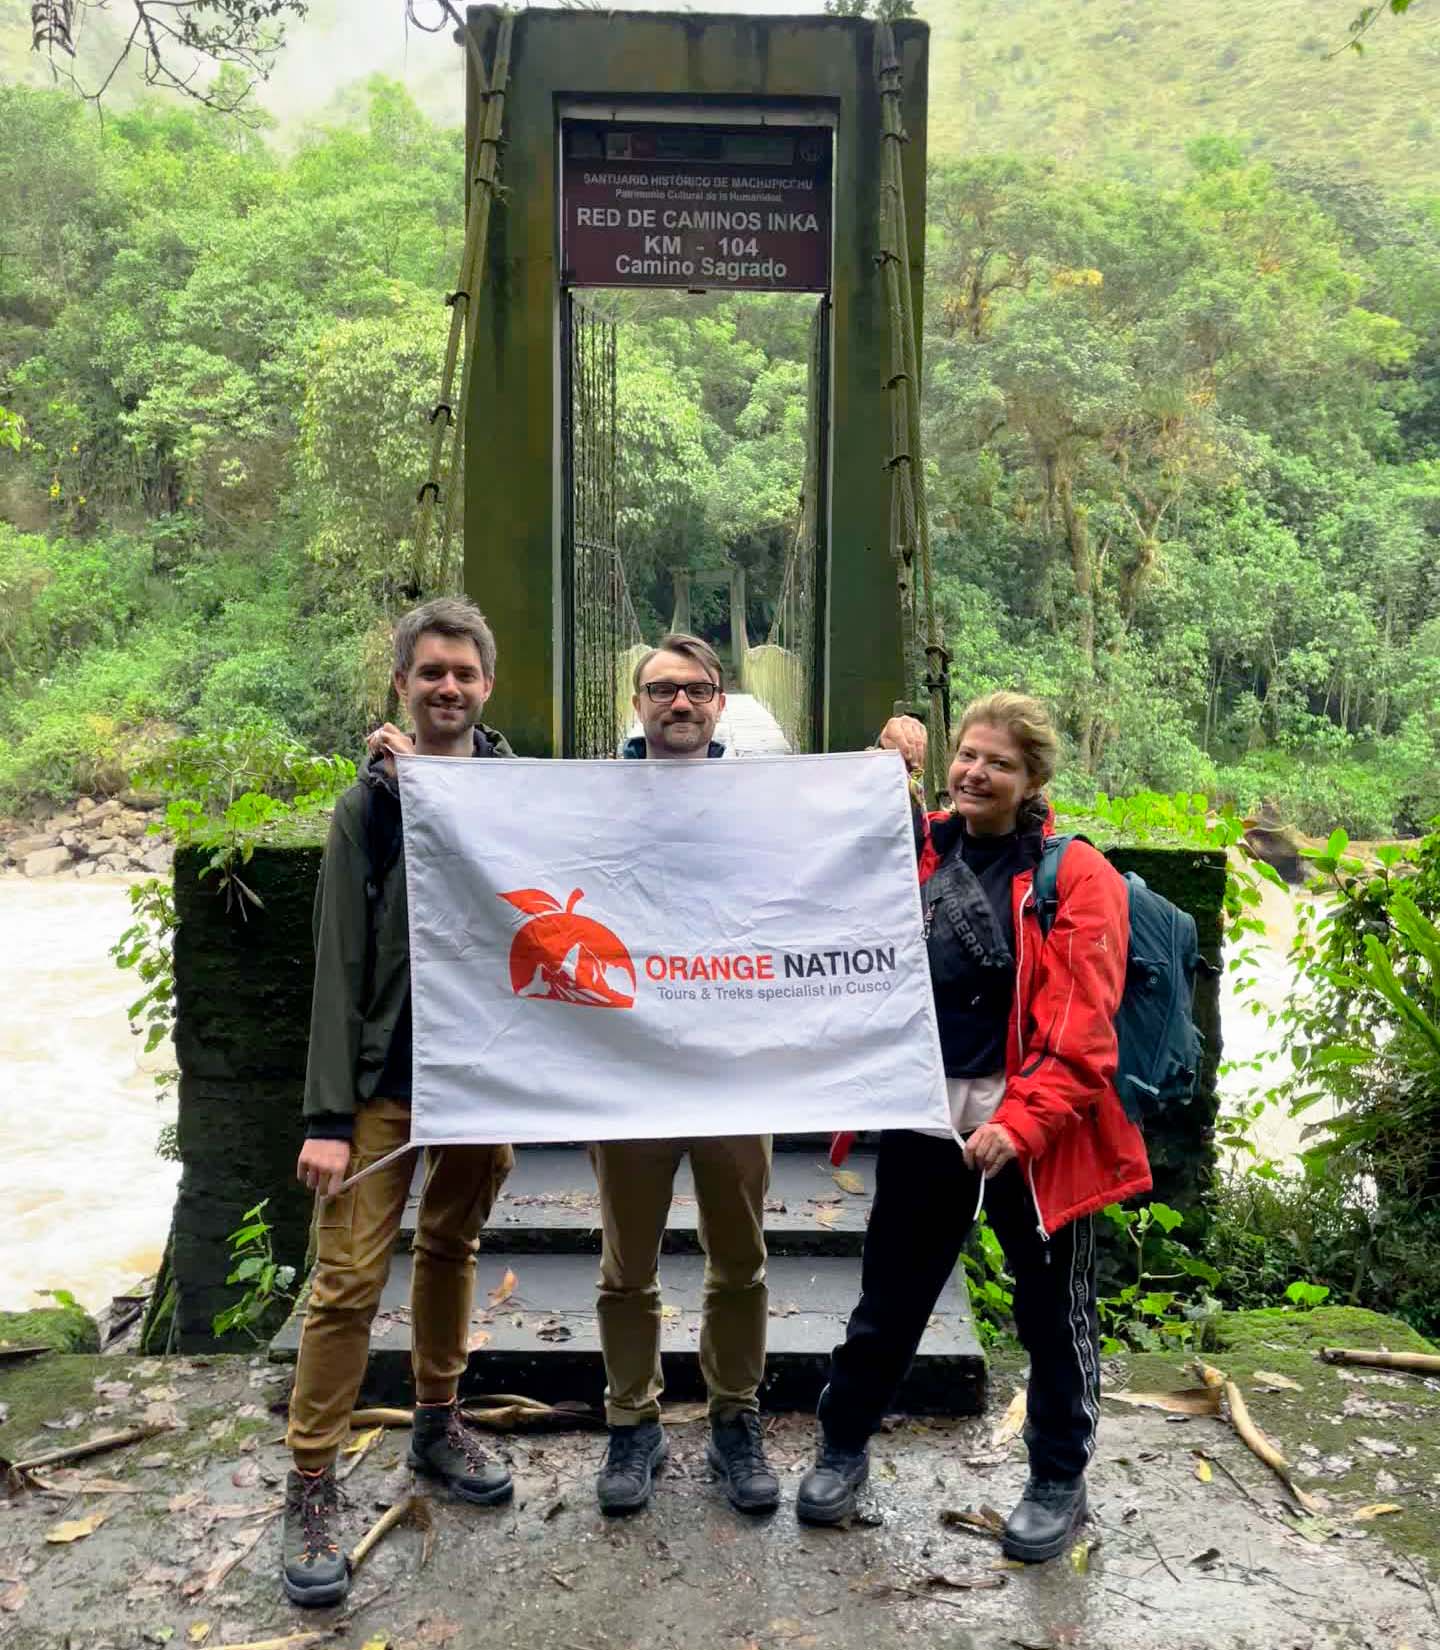 Short Inca Trail hike from KM 104 to Machu Picchu - Orange Nation